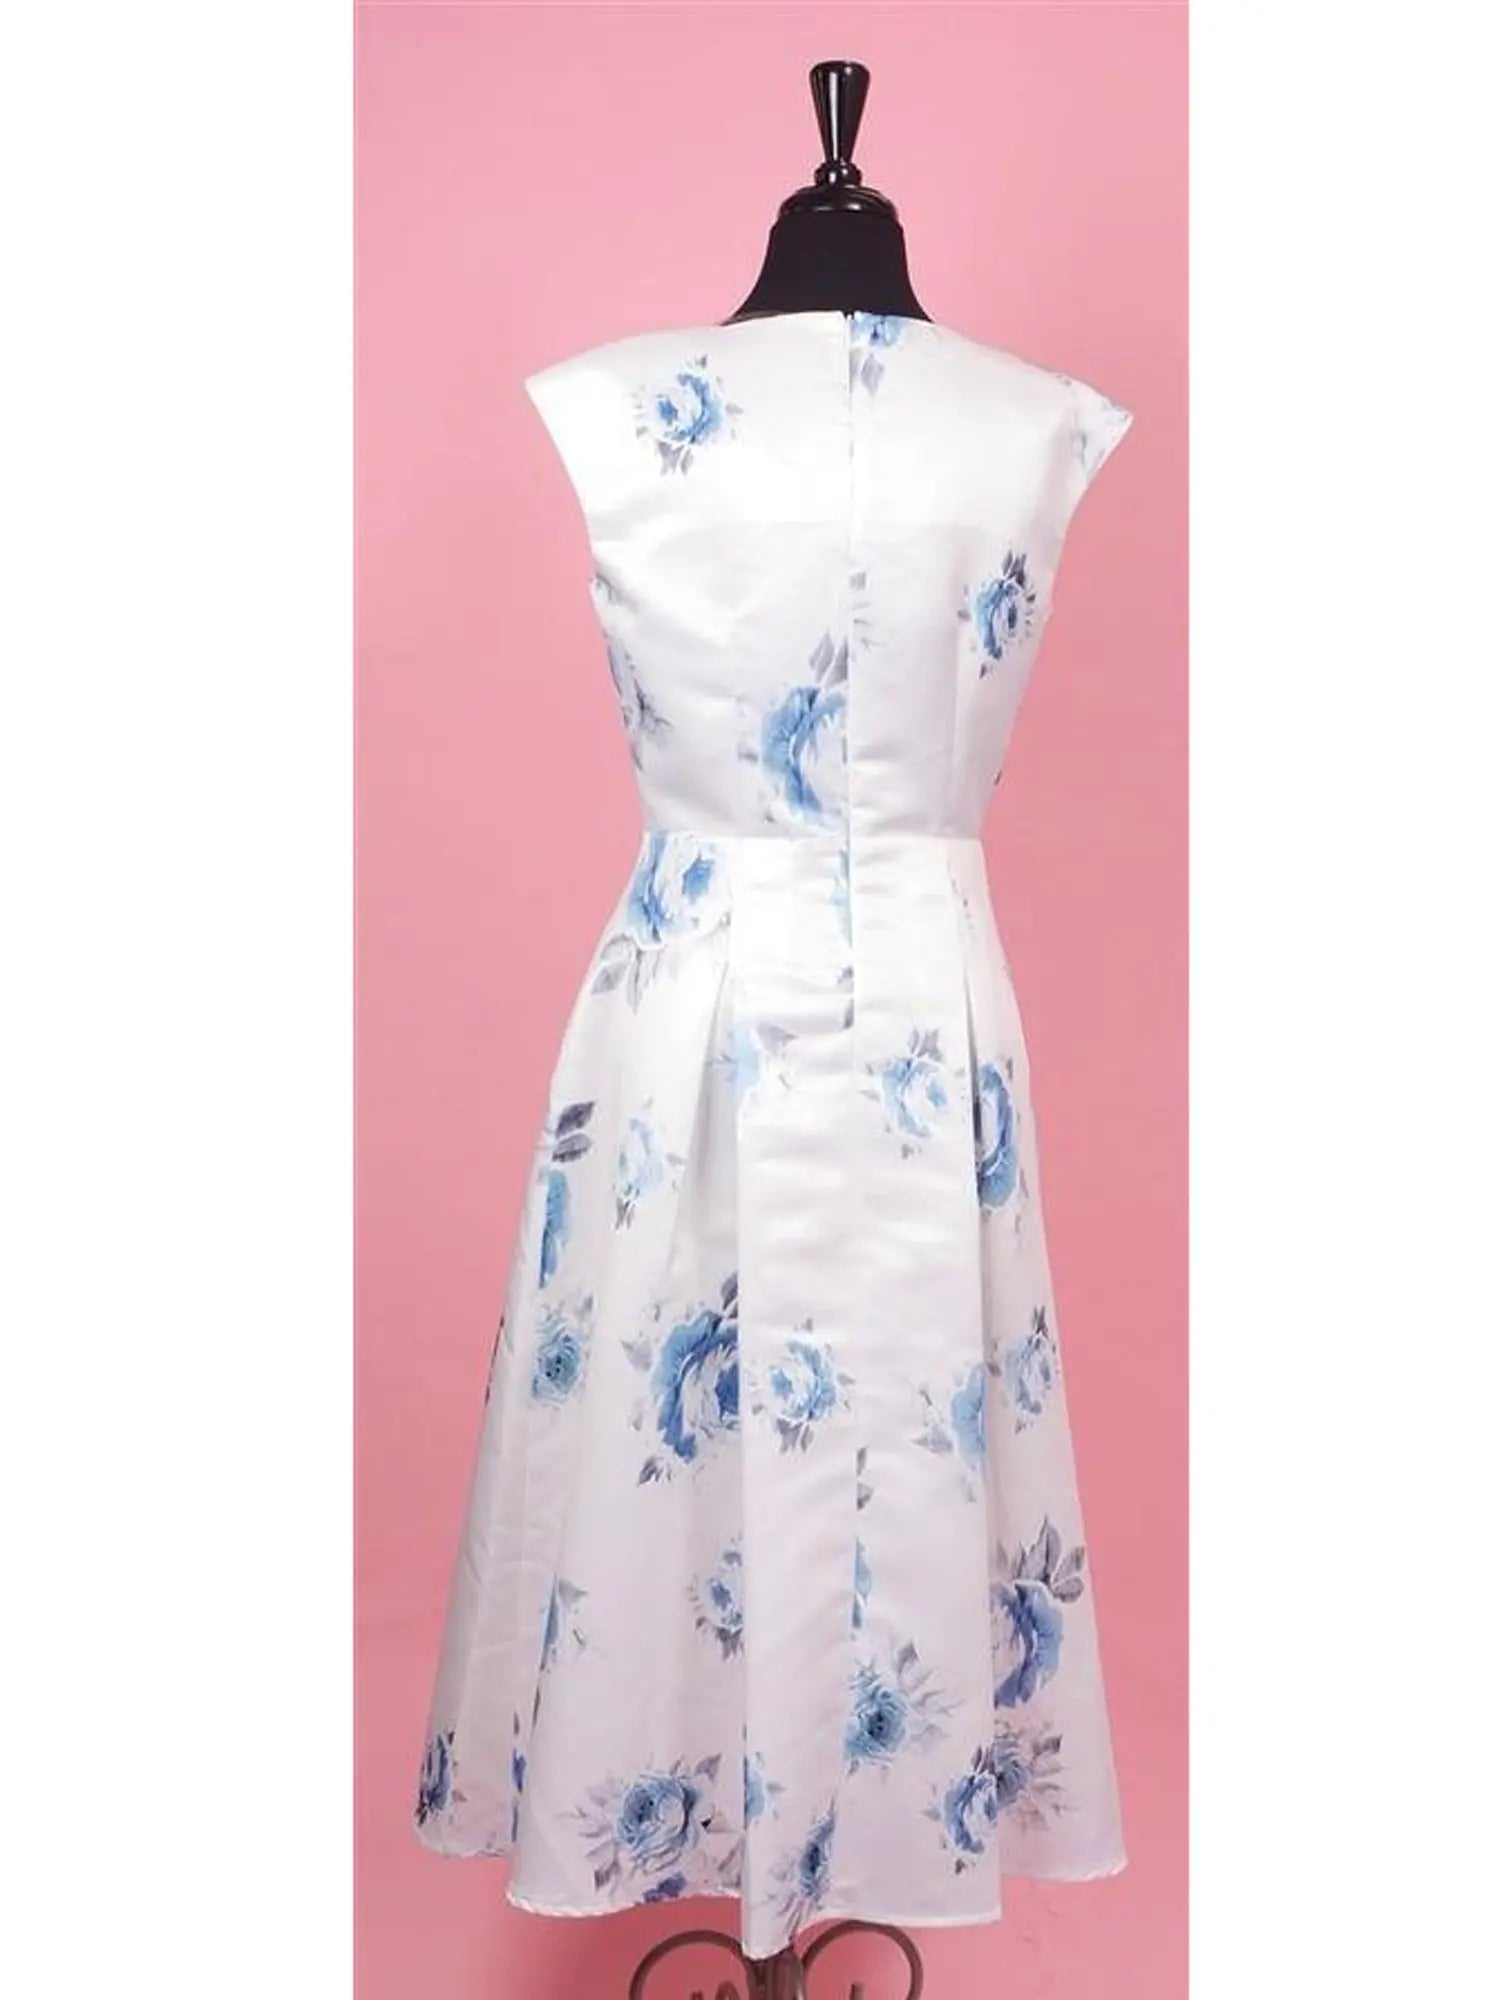 Jeanne D'arc Blue Flower Dress -   Designers